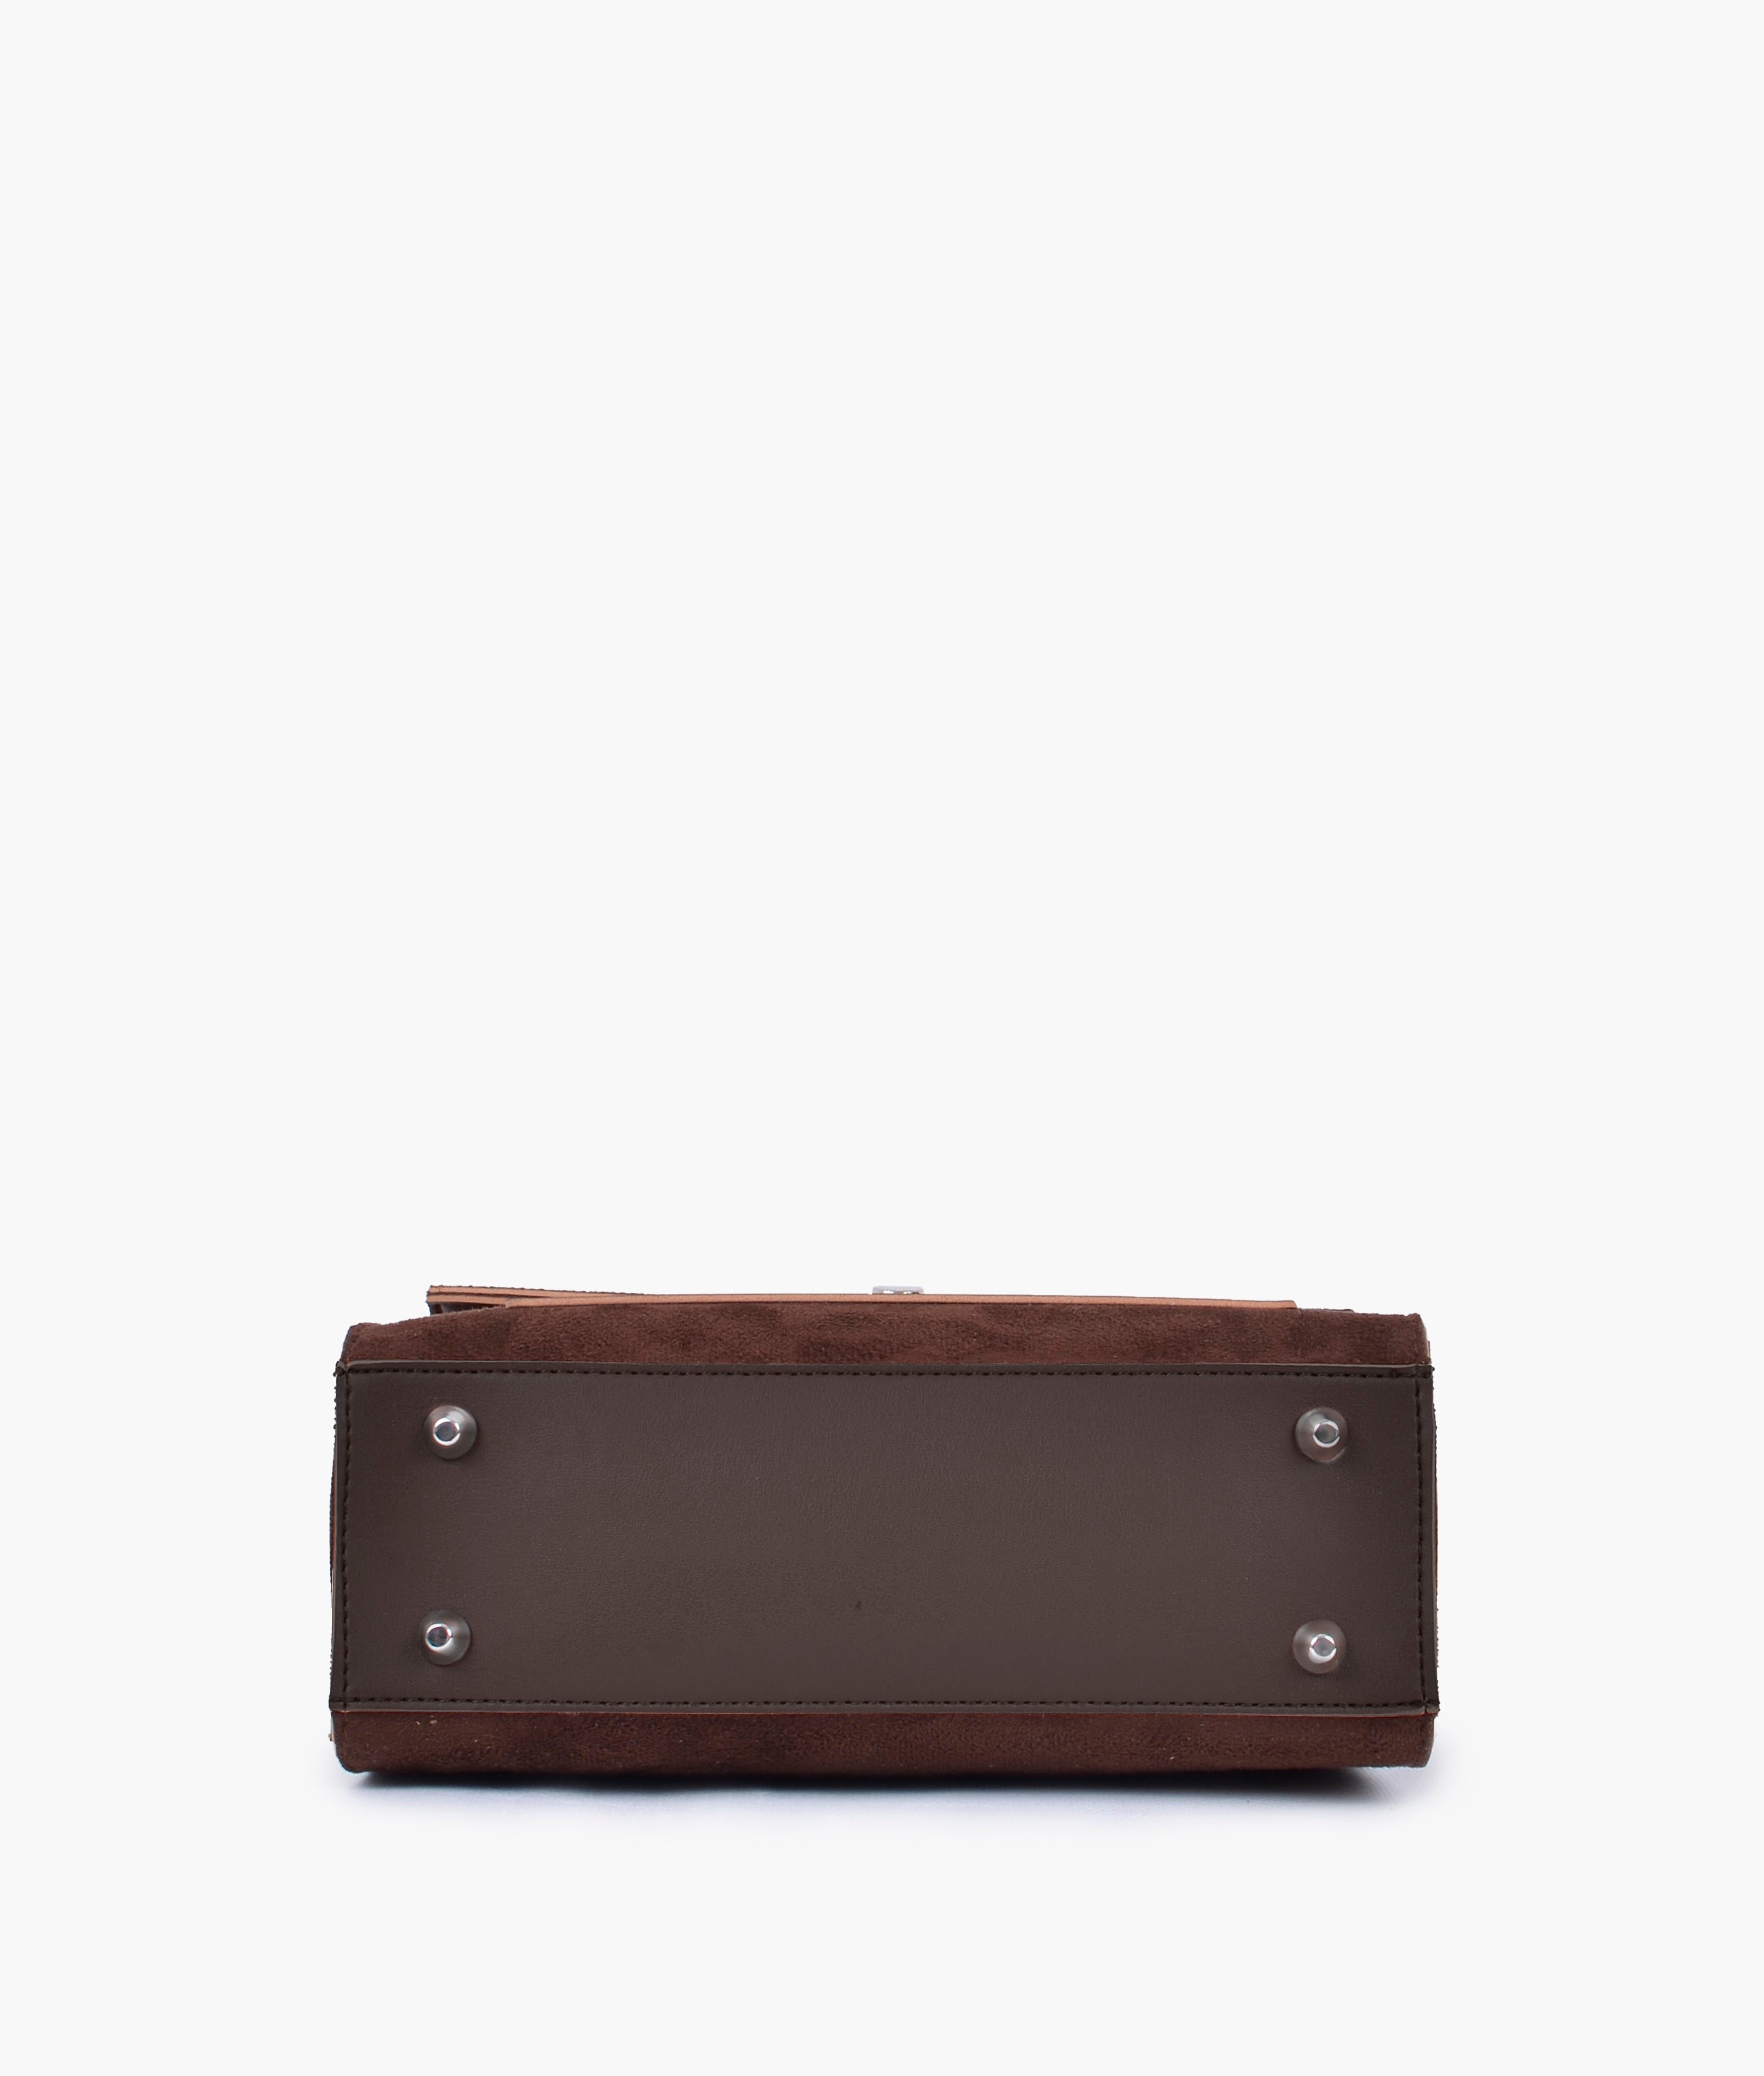 Dark brown suede push-lock messenger bag